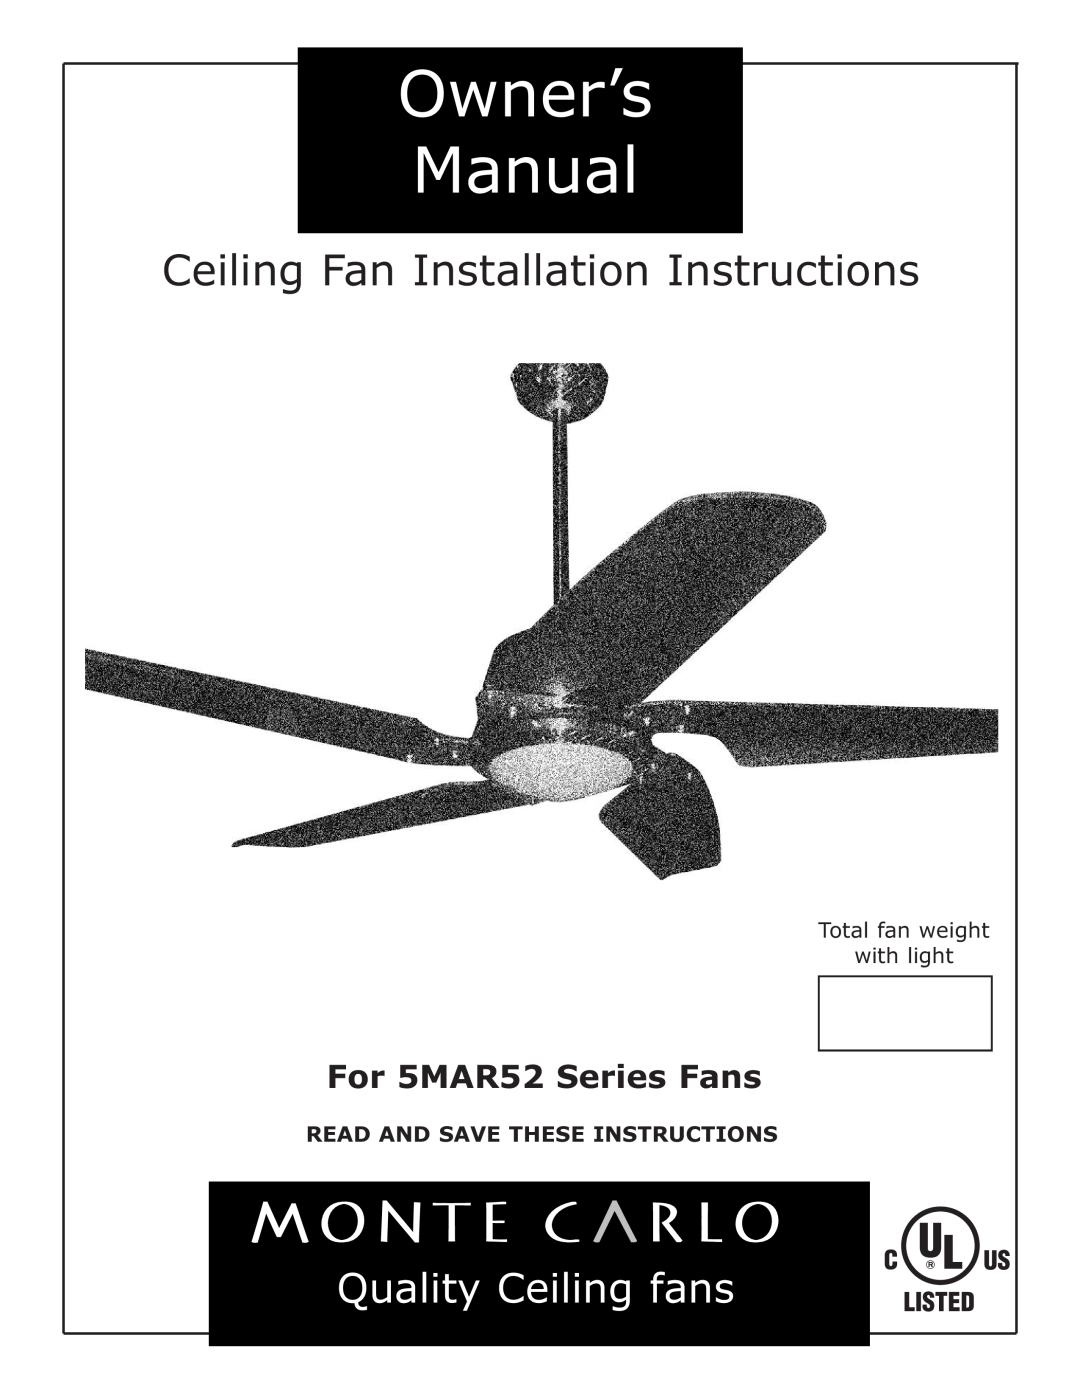 Monte Carlo Fan Company 5MAR52 owner manual Ceiling Fan Installation Instructions, Quality Ceiling fans 